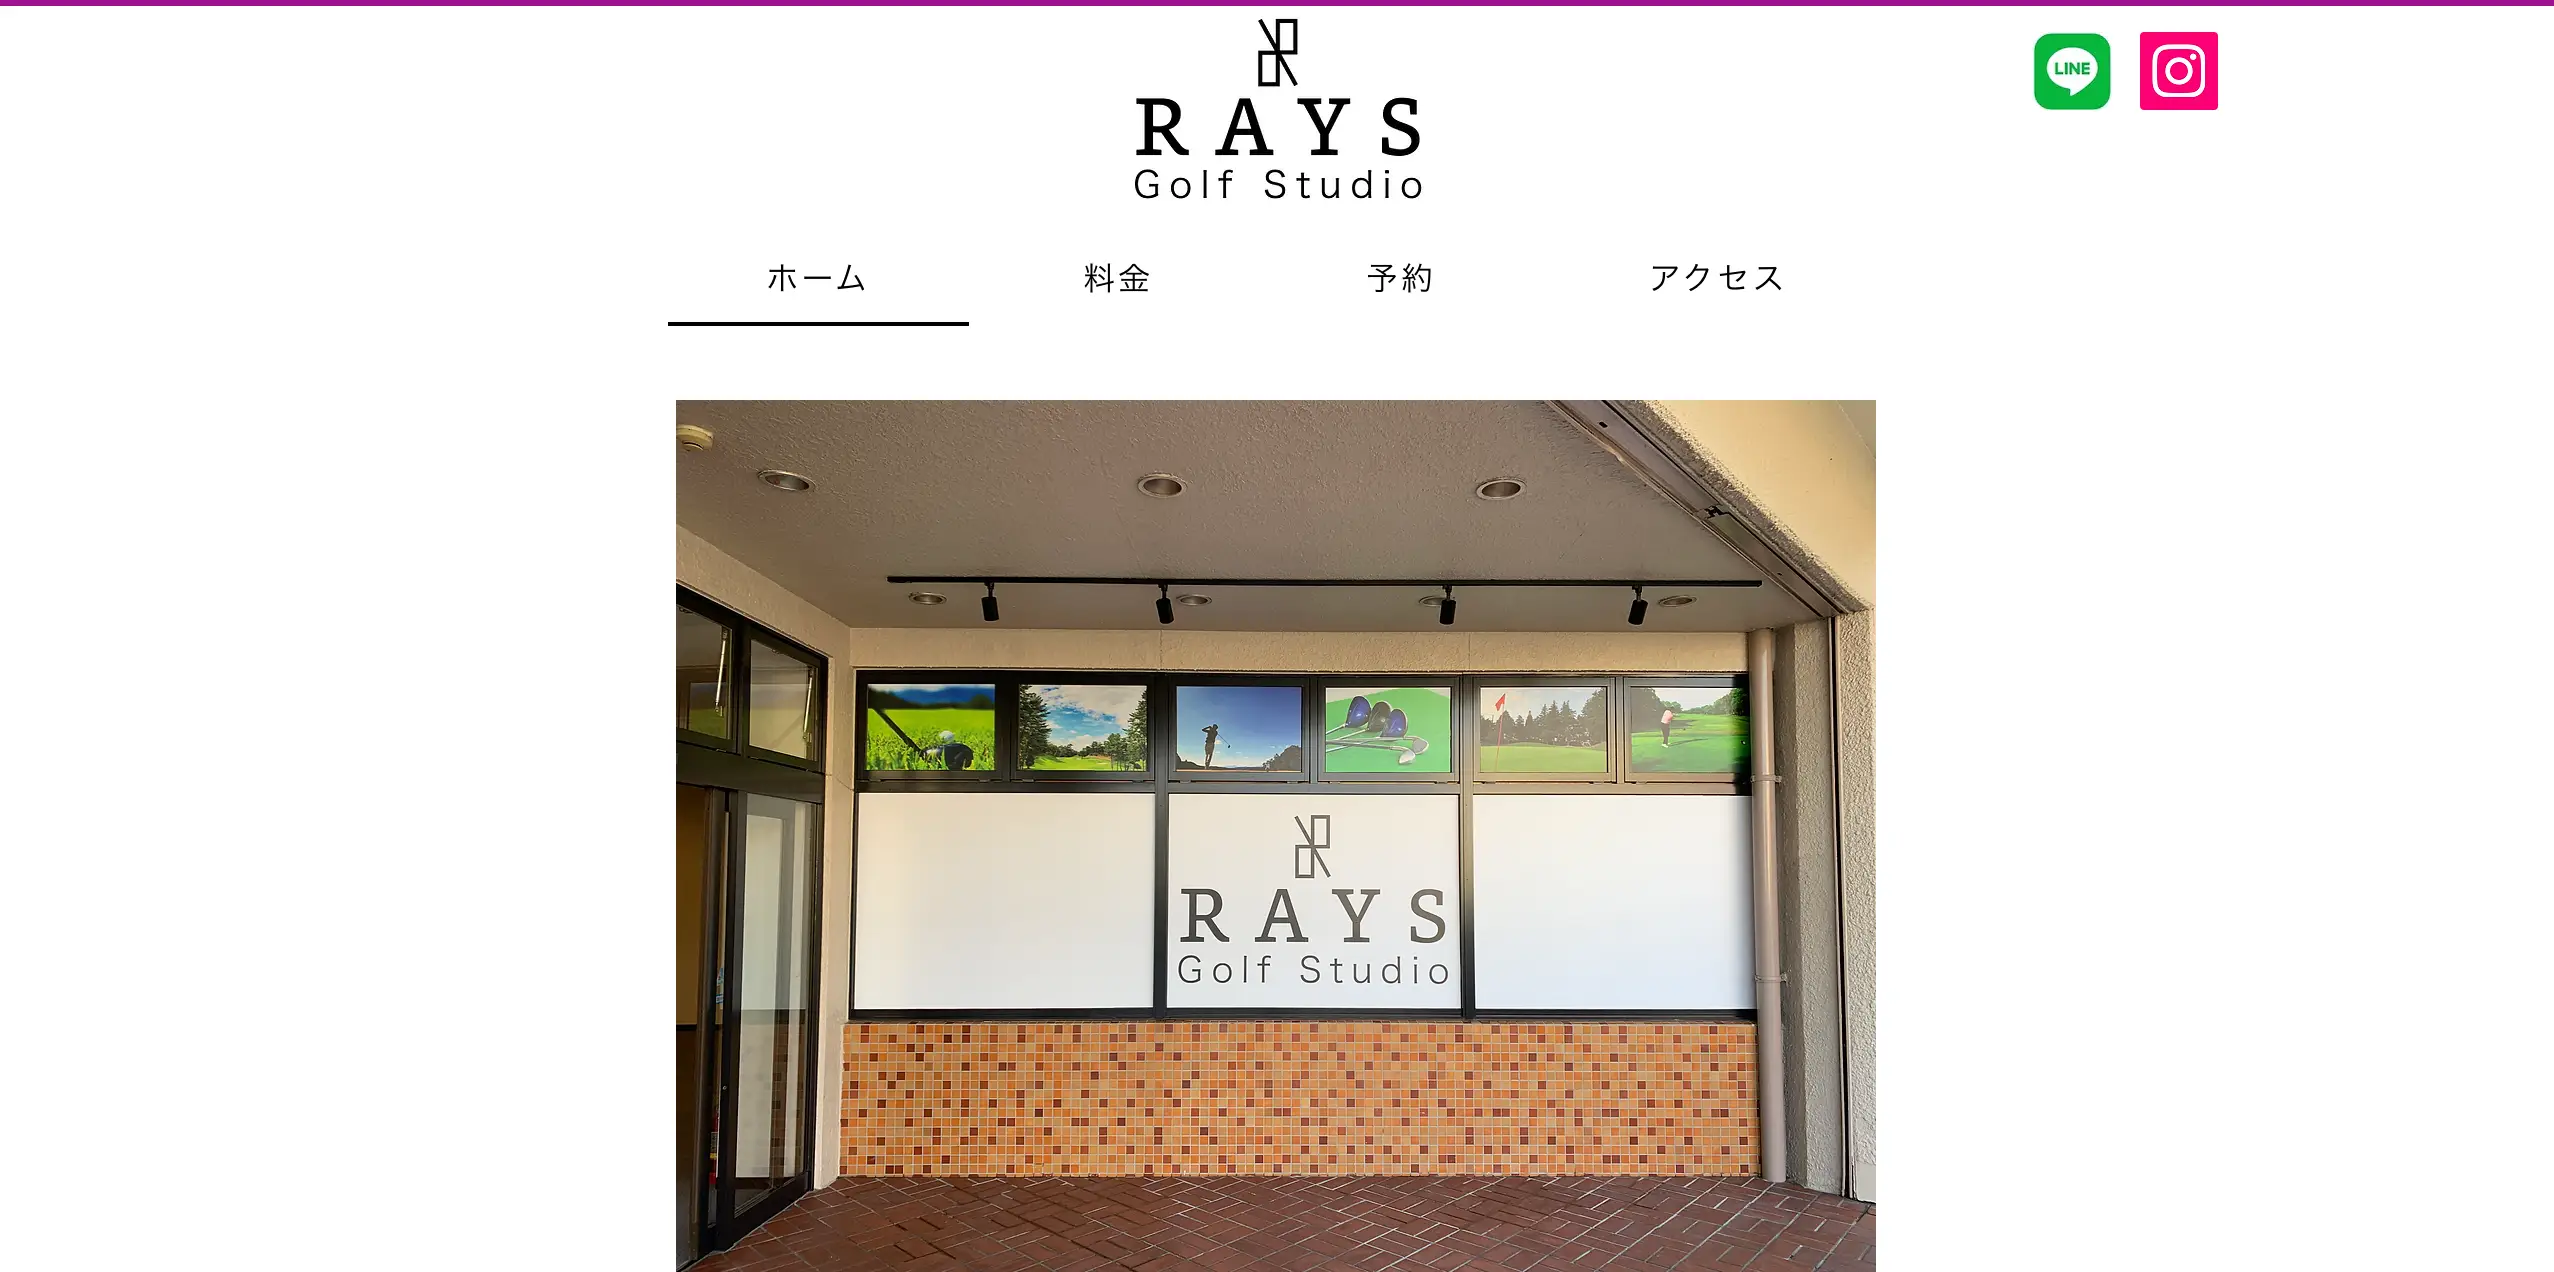 RAYS Golf Studio